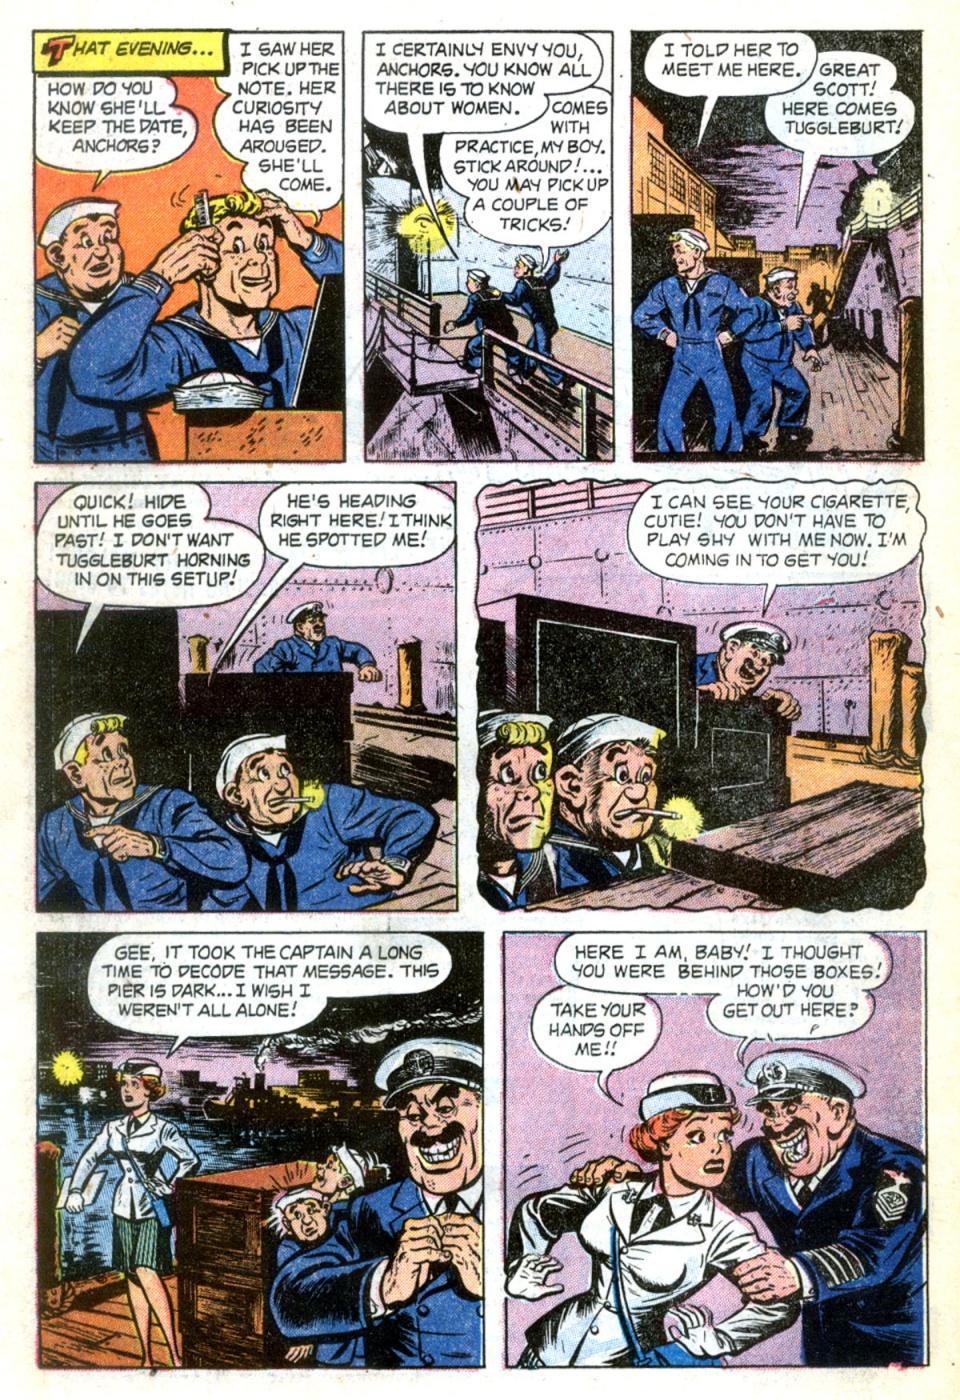 Anchors the Salt Water Daffy - Comics (26)